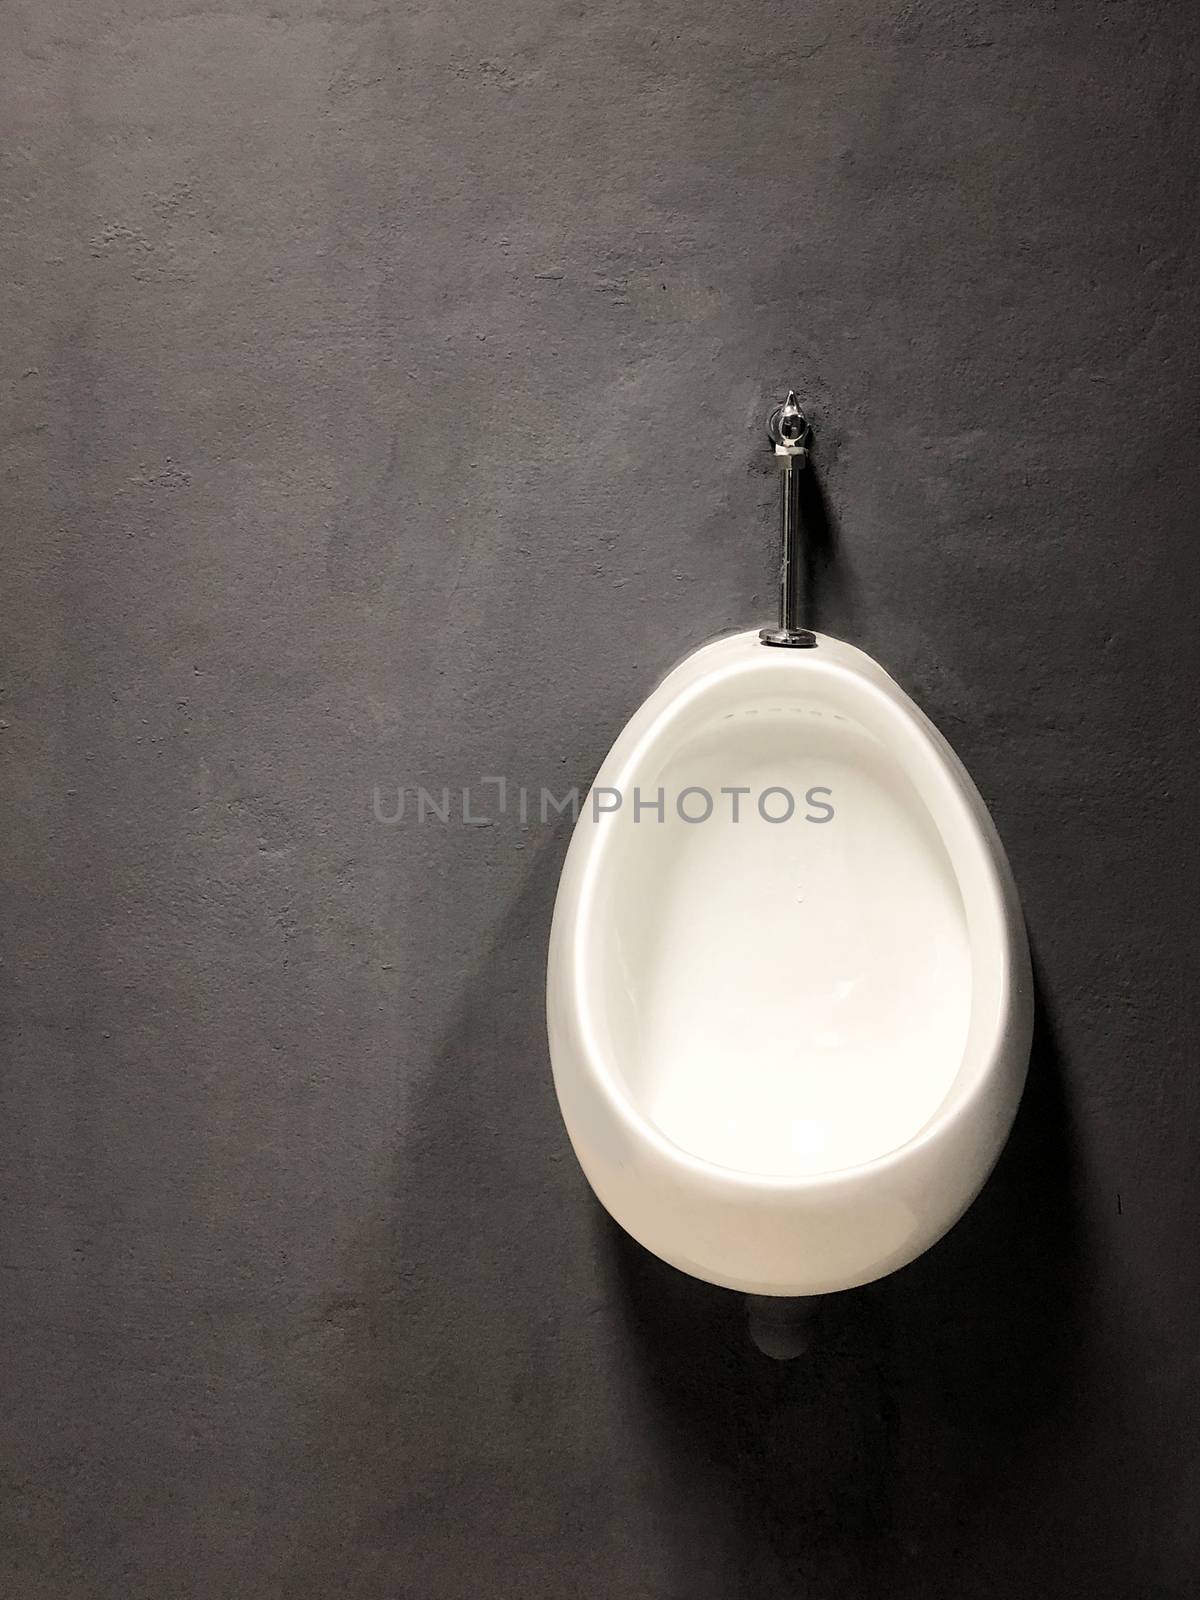 Urinal hang on loft wall style background by Surasak